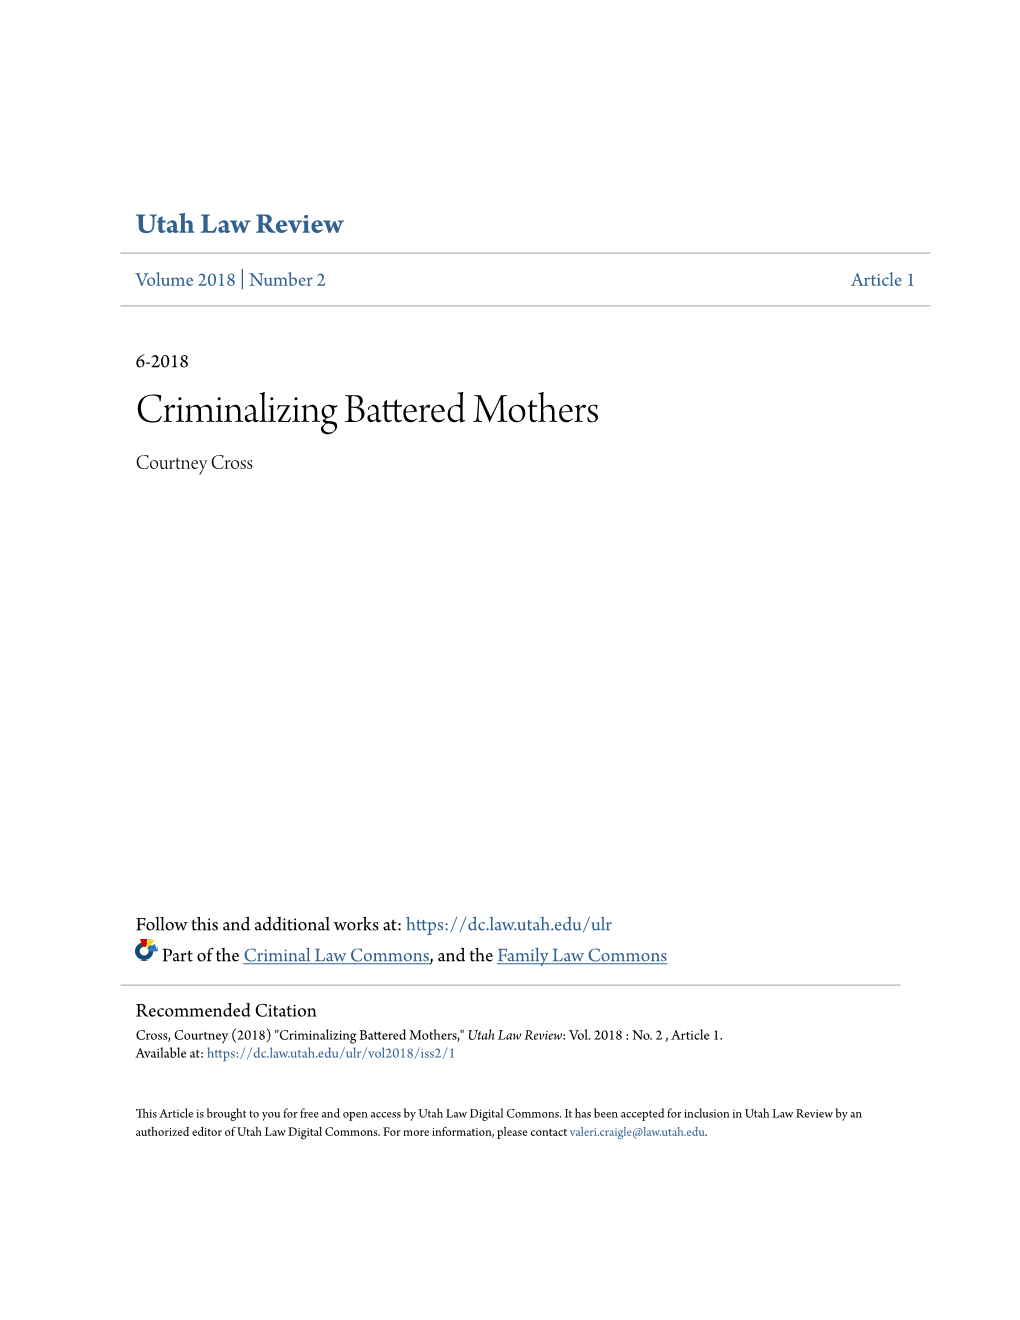 Criminalizing Battered Mothers Courtney Cross